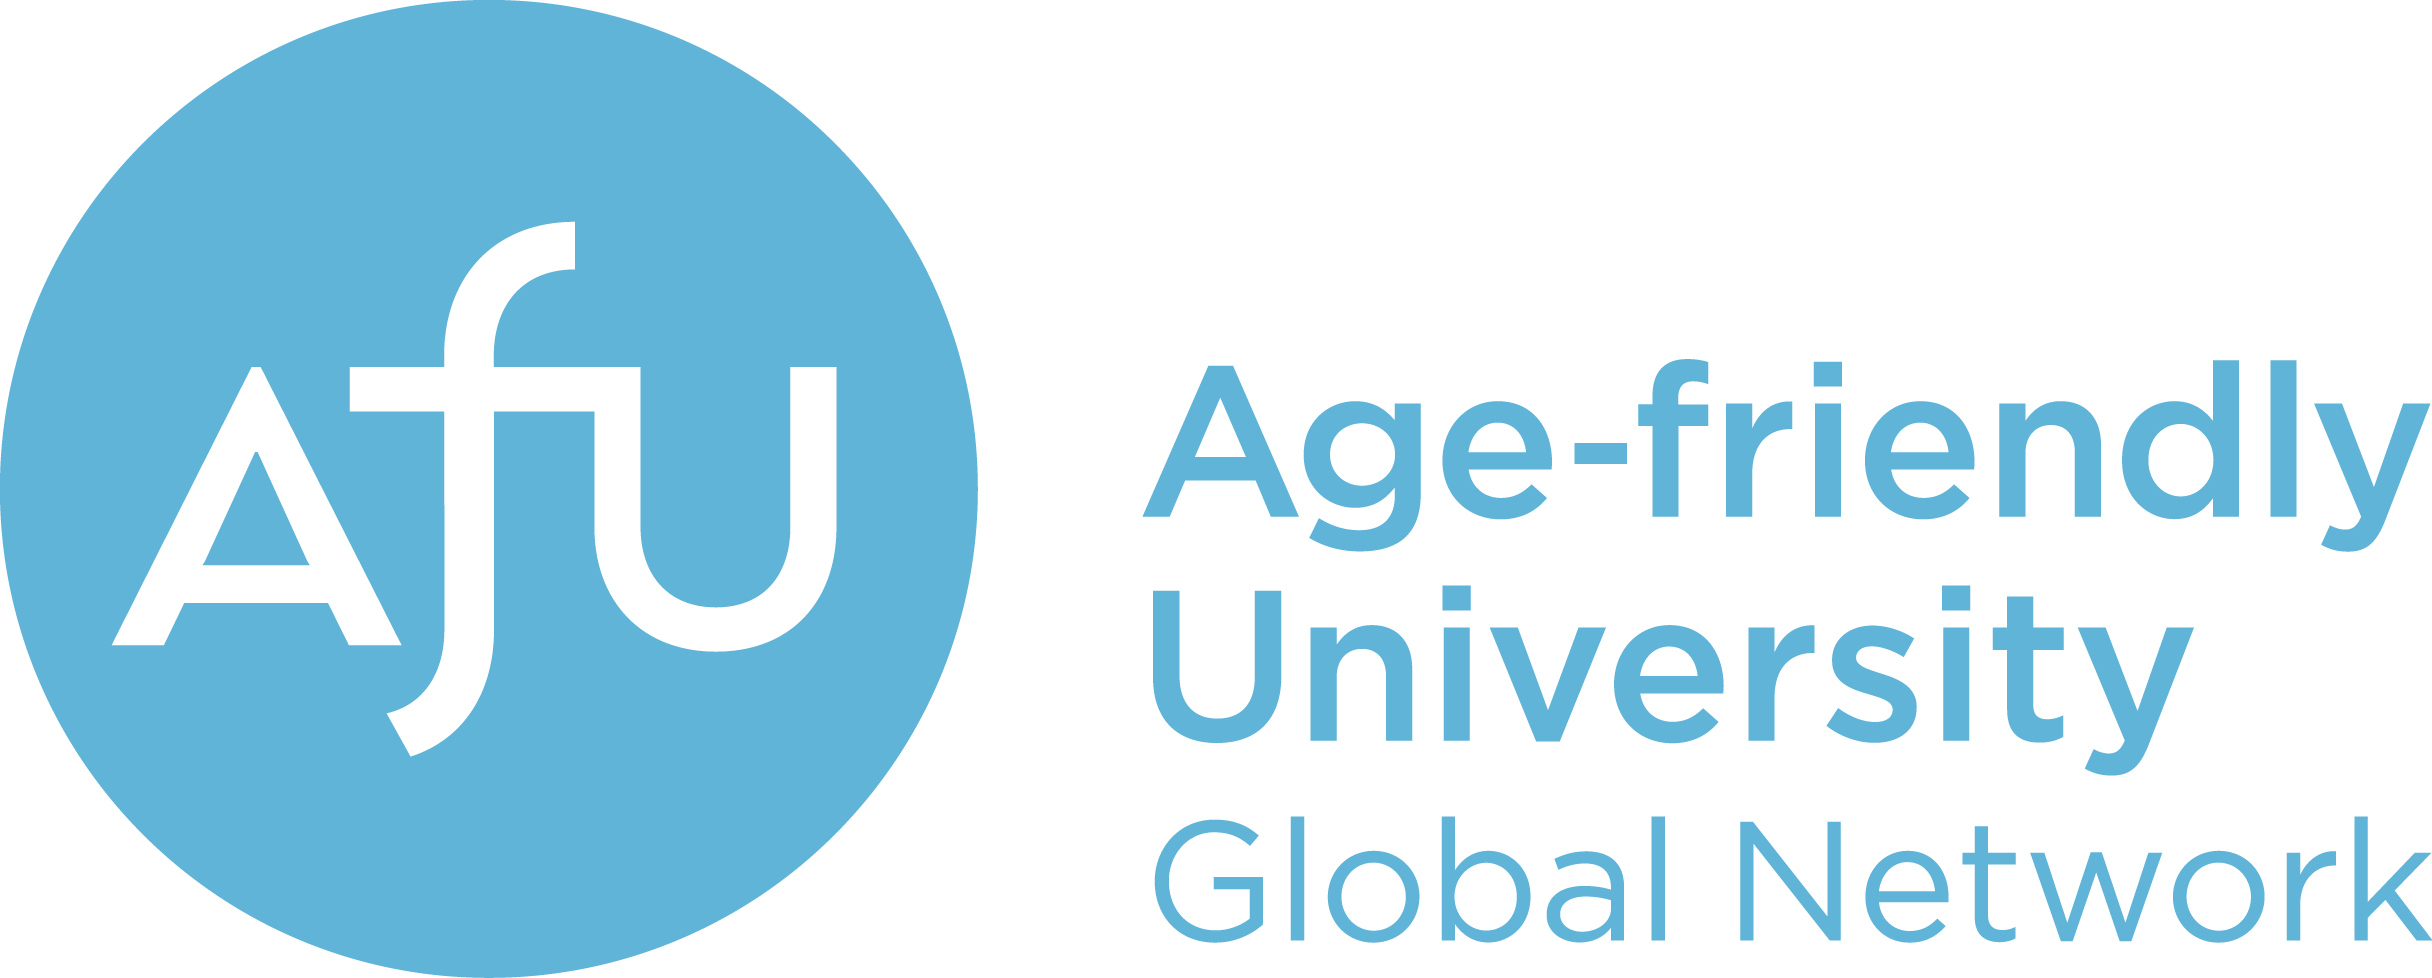 Age-Friendly University Global Network Logo